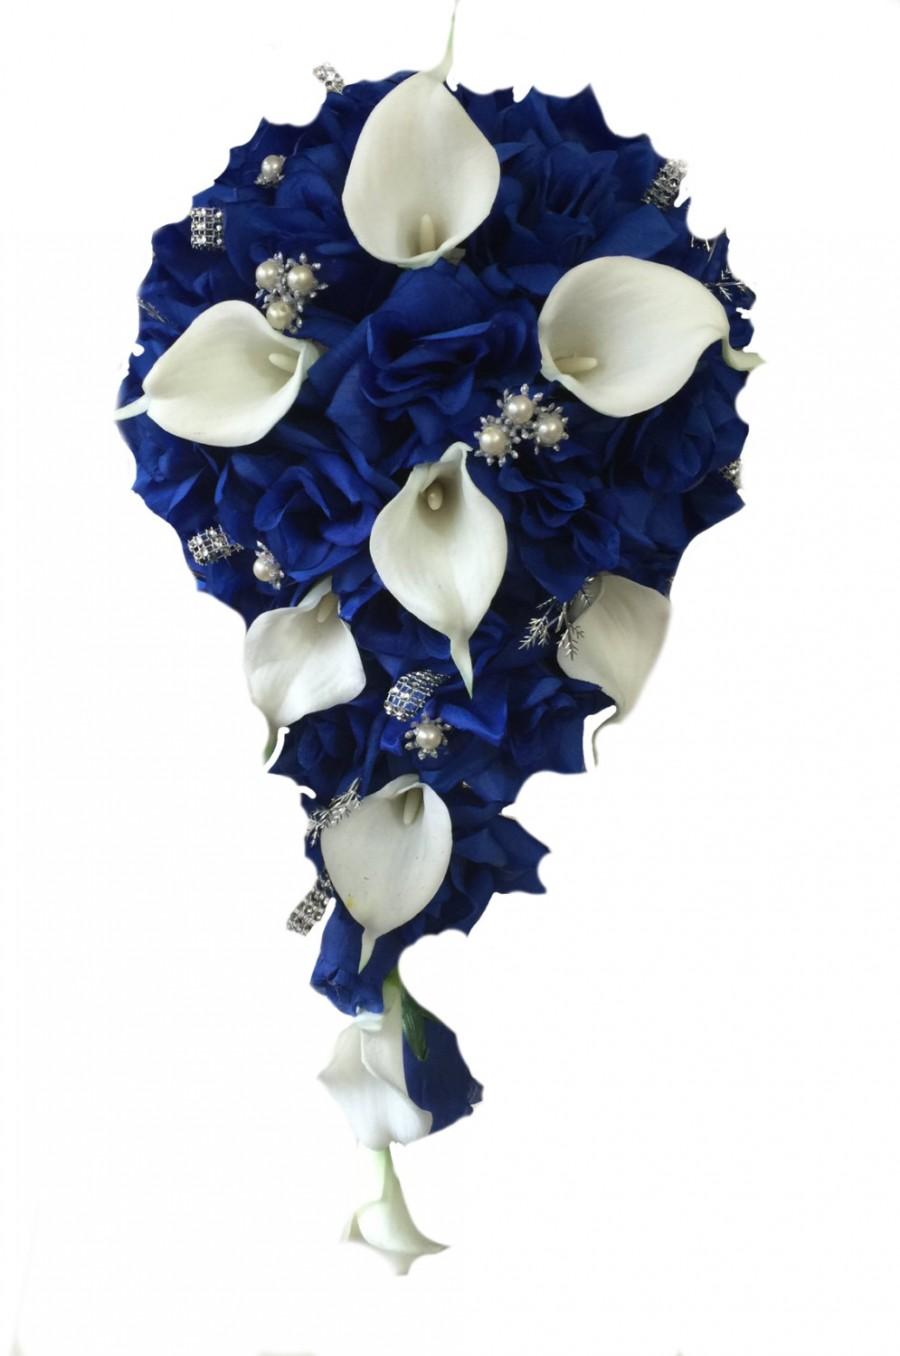 زفاف - Cascade Bouquet - Royal Blue Roses and Real Touch Calla Lily with Silver Accents